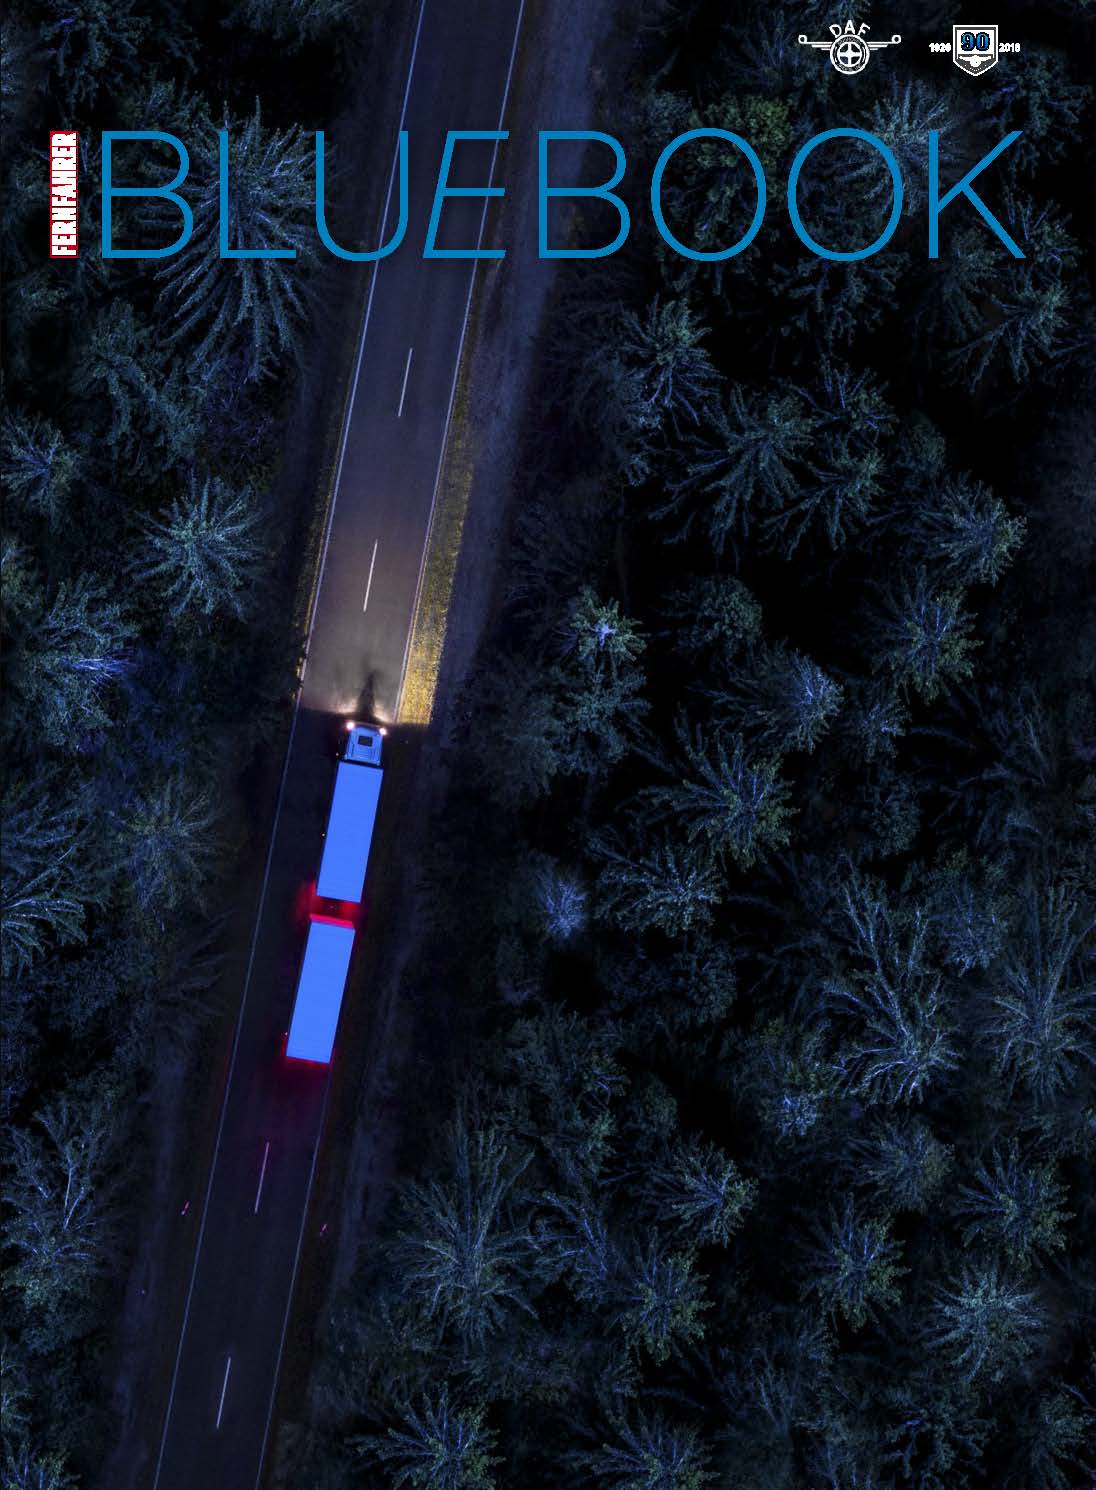 Bluebook